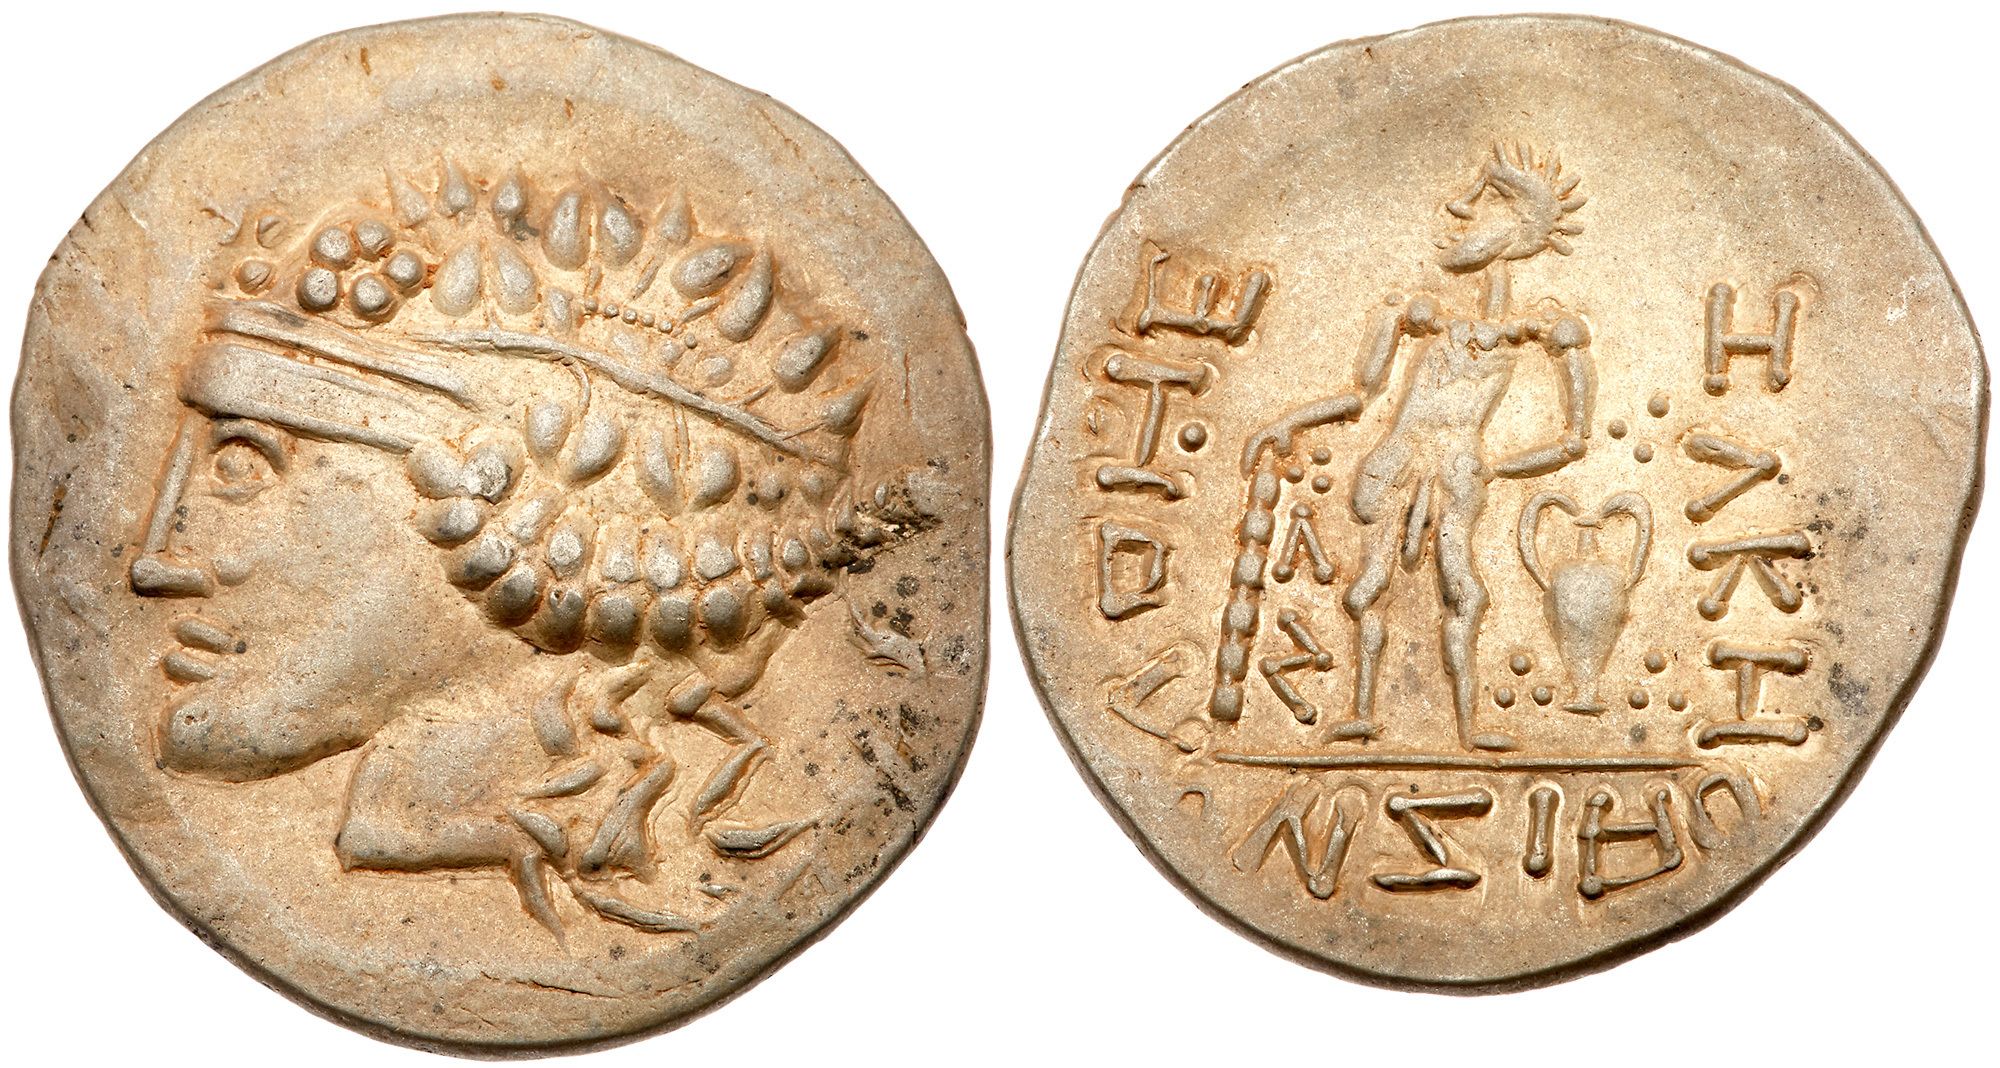 Lower Danube, Imitating Thasos. Silver Tetradrachm (16.12 g), 1st century BC. Wreathed head of